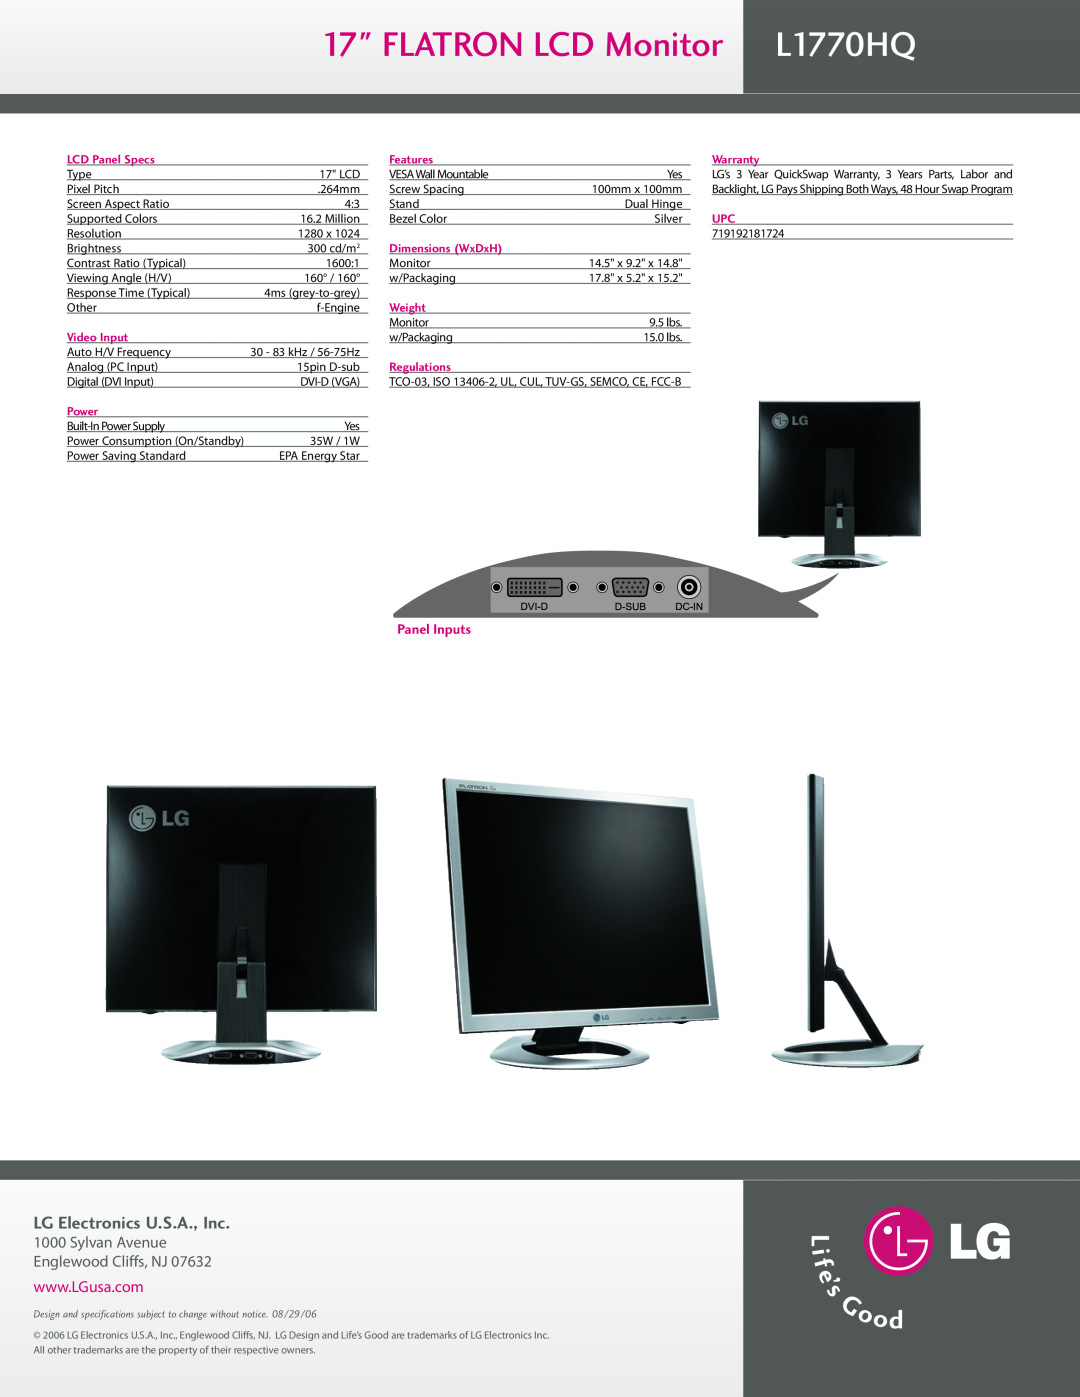 LG Electronics L1770HQ-BF FLATRON LCD Monitor L1770HQ, LG Electronics U.S.A., Inc, Panel Inputs, StandFeatures, Warranty 